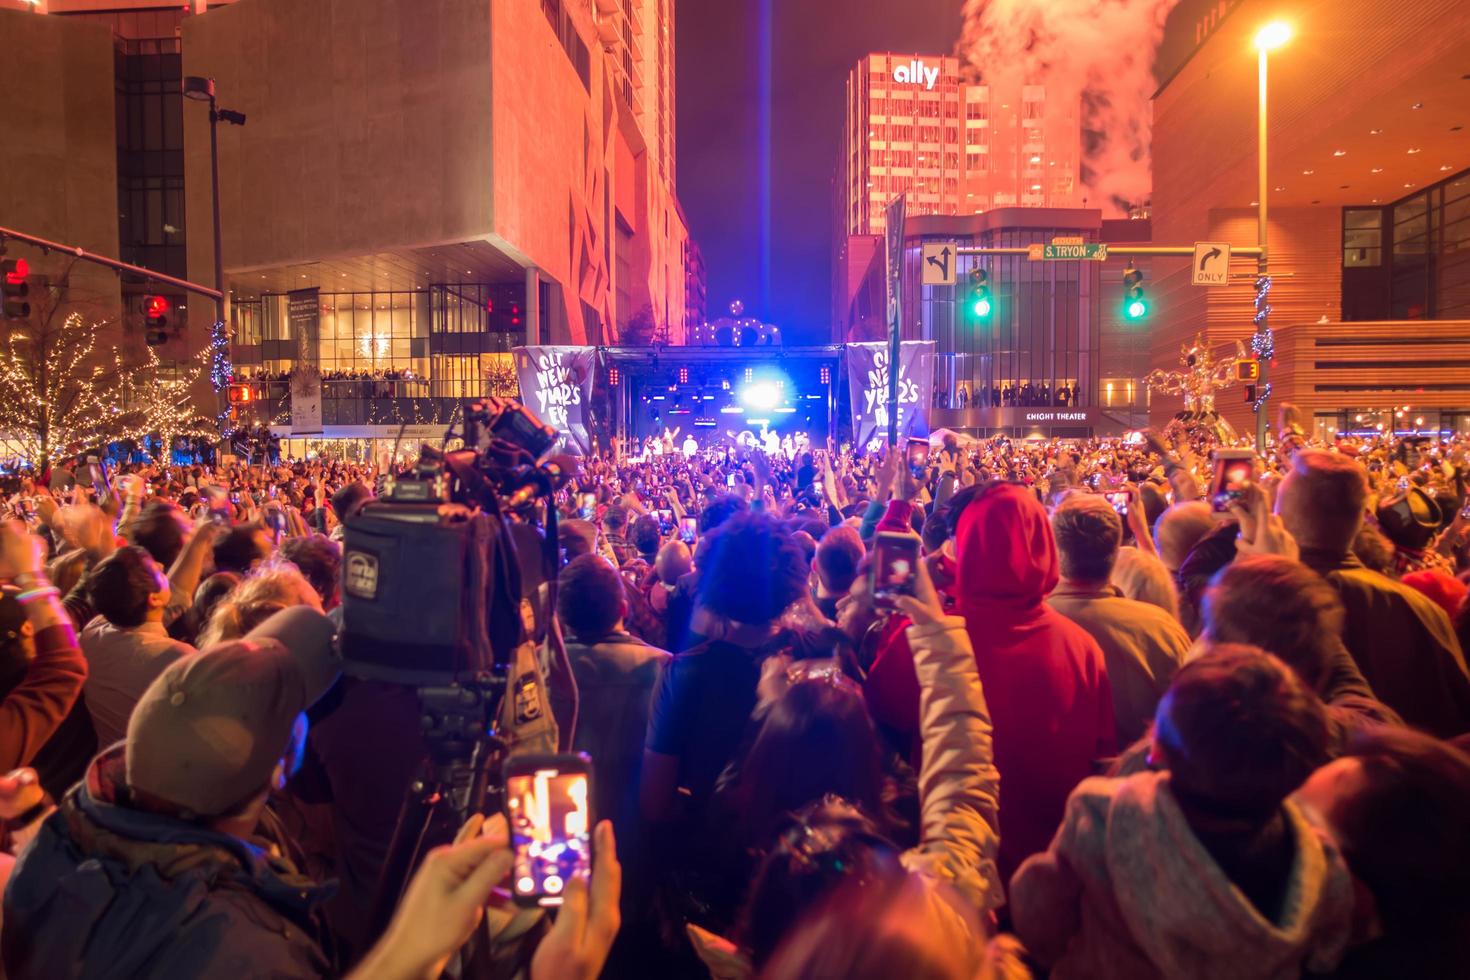 Charlotte, NC, USA, 2021 - New Years Eve crowd photo